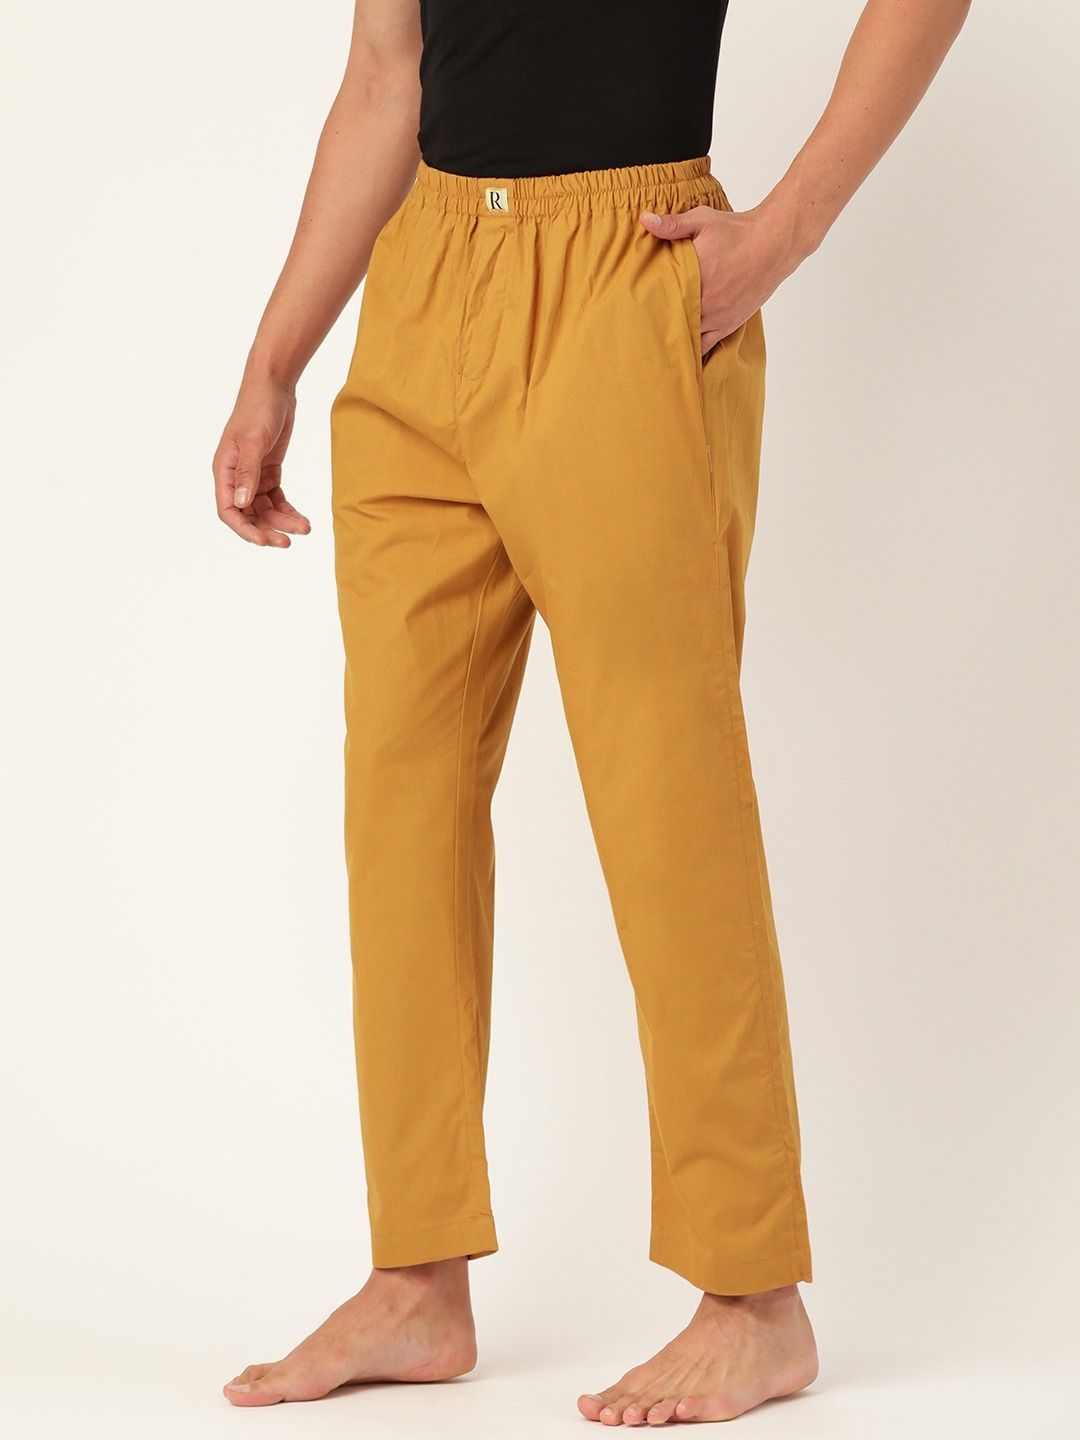 Khaki Pure Cotton Elastic Lounge Wear Pajama Pant Online In India SizeShirt  M Pyjama Length 40 Color Gold